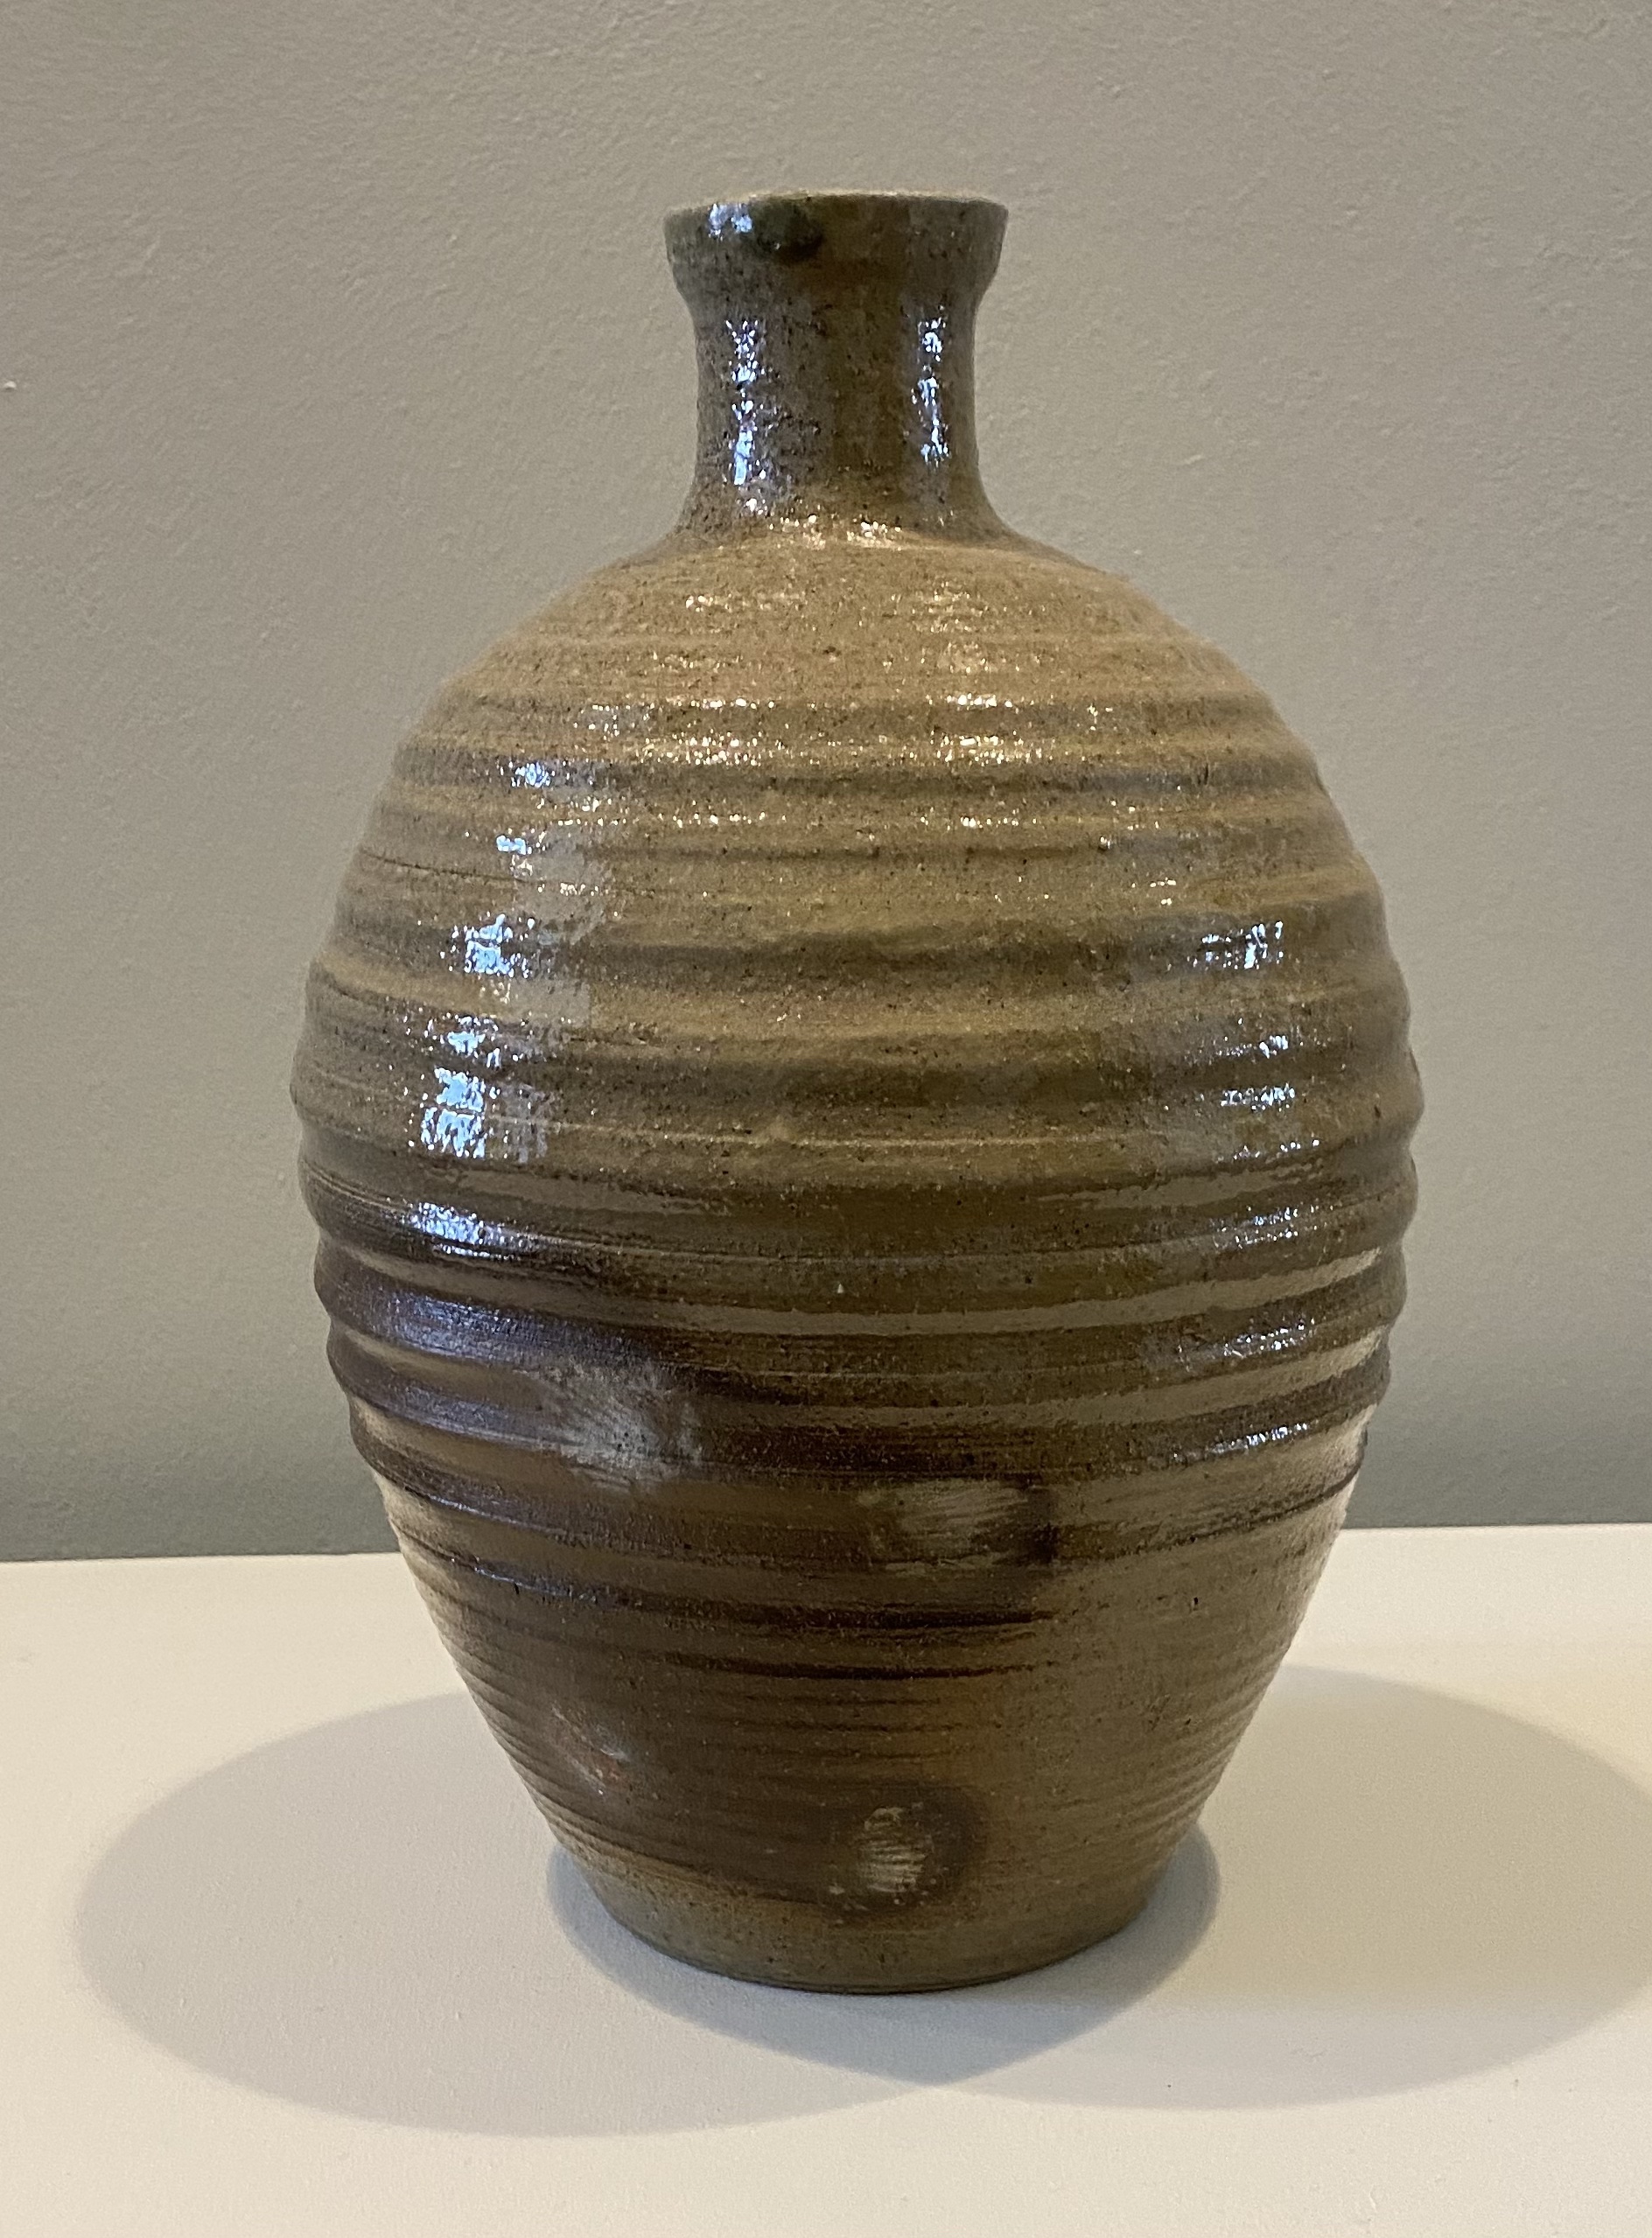 Bottle
wood/salt-fired stoneware
13"
$95.